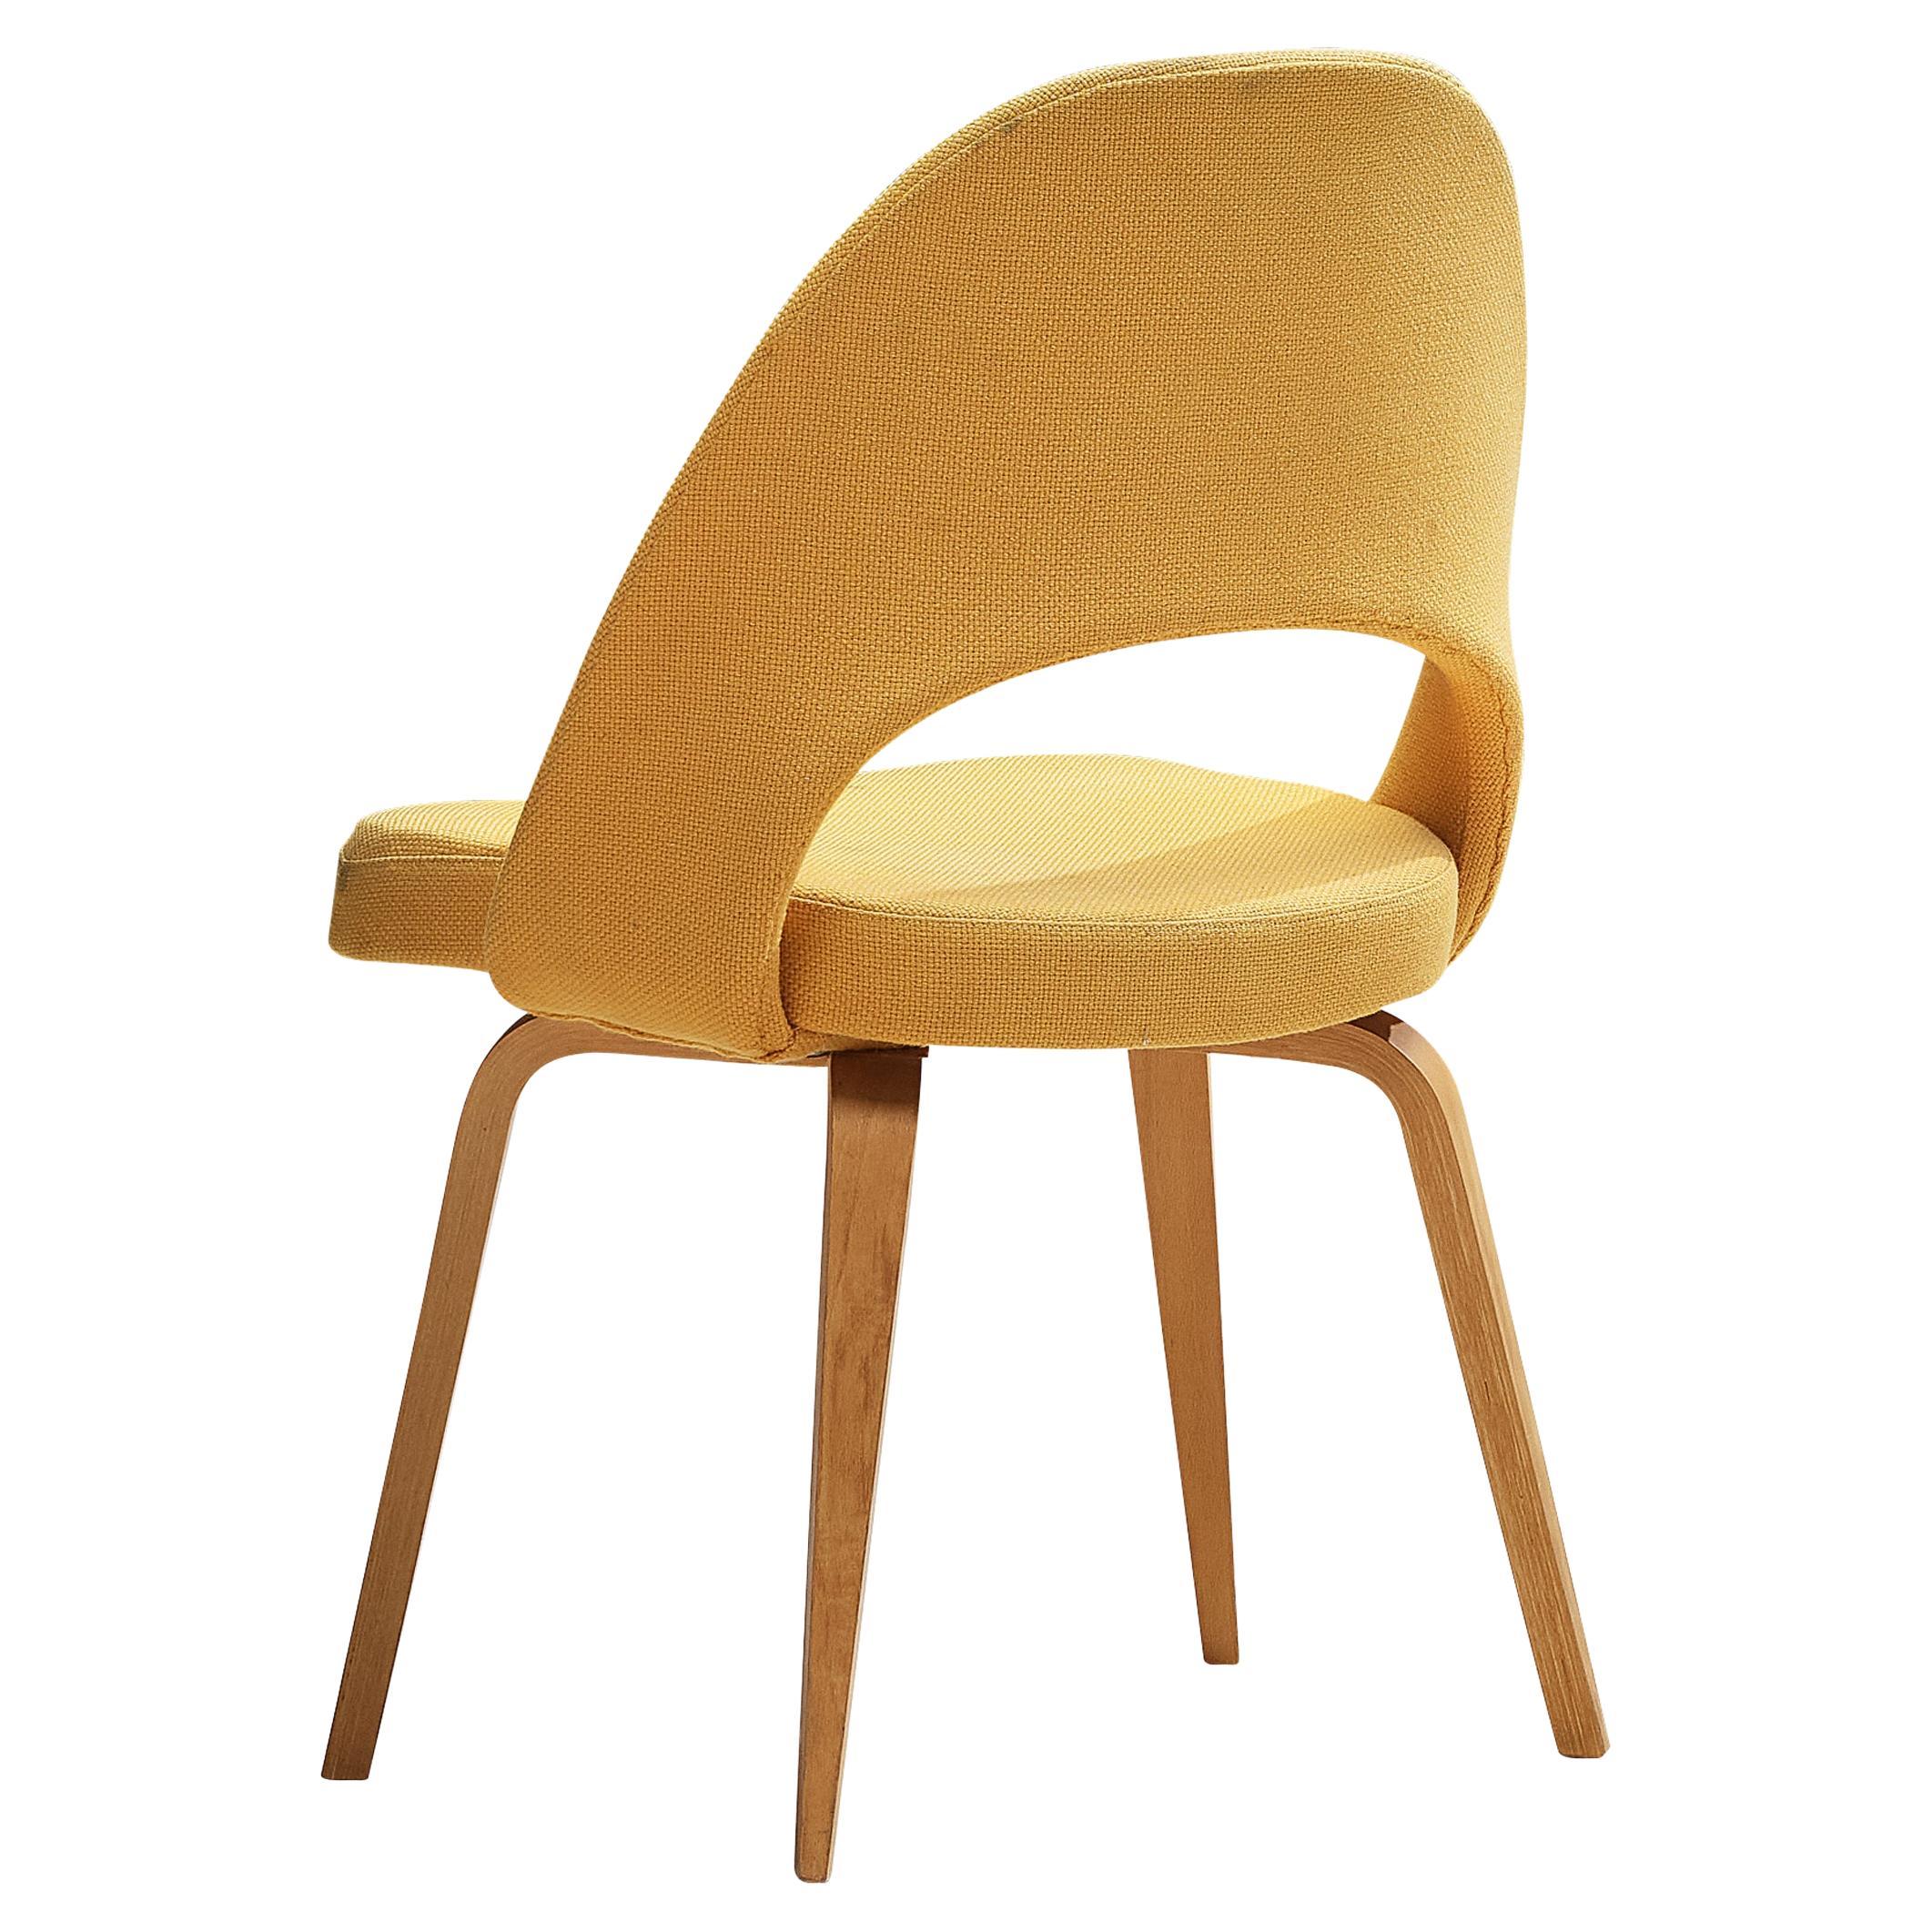 Eero Saarinen for Knoll 'Executive' Dining Chair in Ocher Yellow Upholstery 